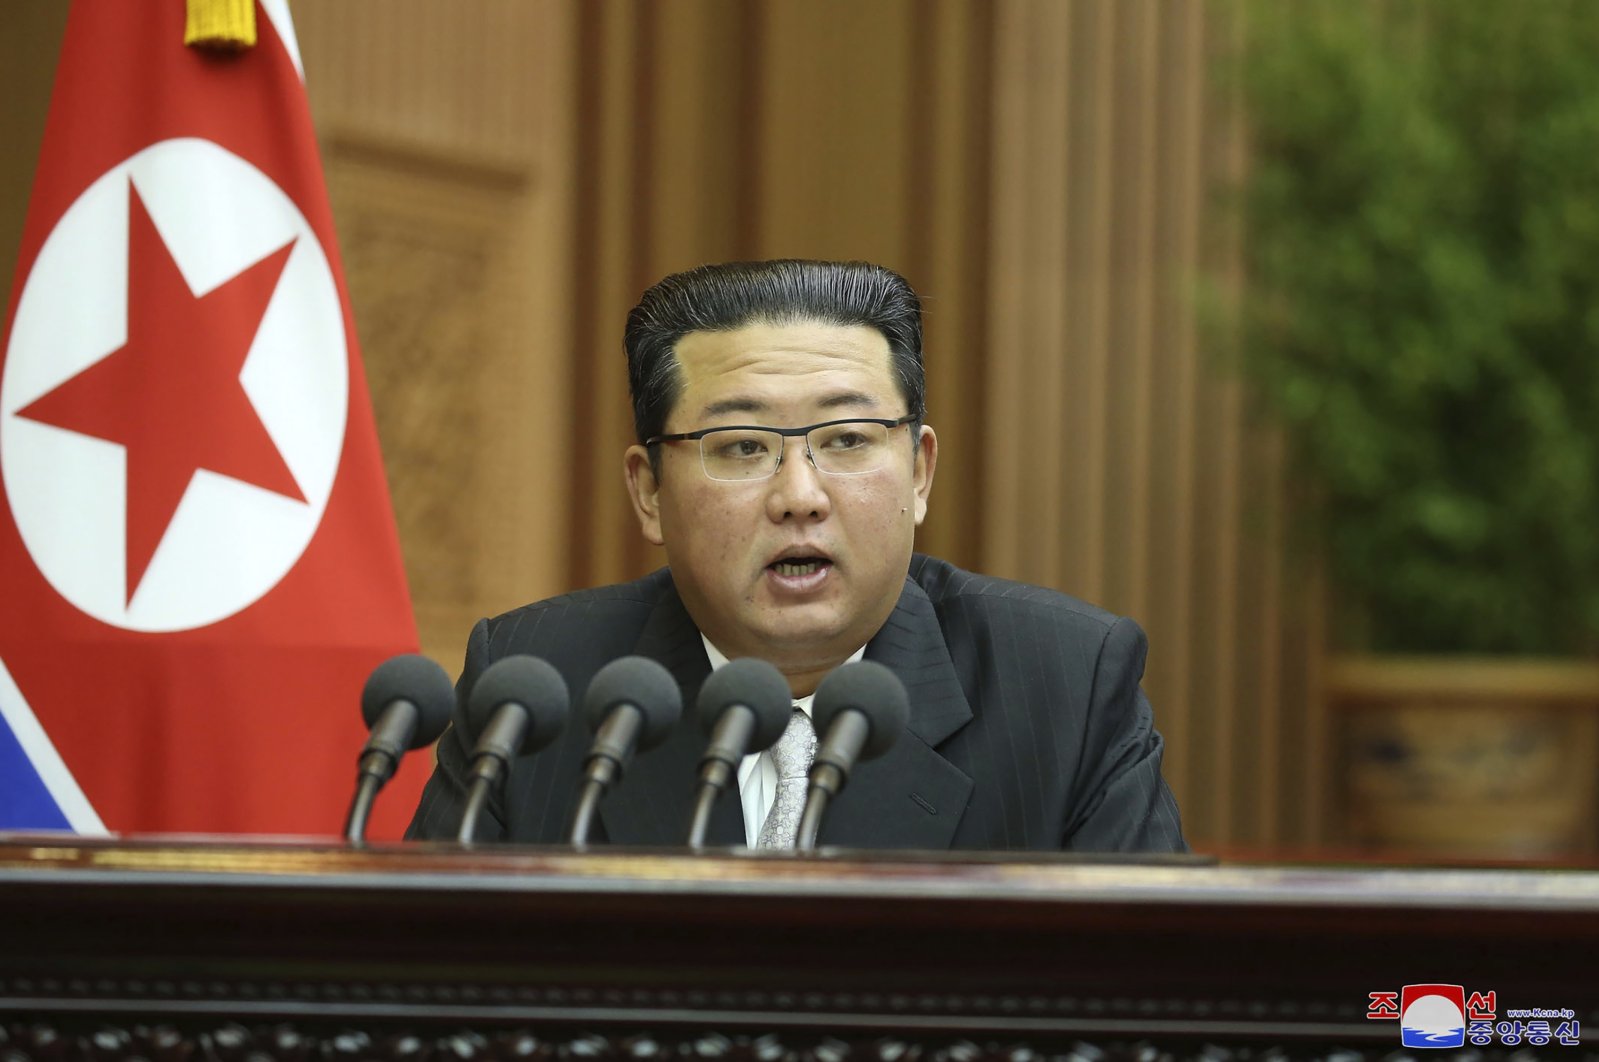 North Korean leader Kim Jong Un speaks during a parliament meeting in Pyongyang, North Korea, Sept. 29, 2021. (AP Photo)